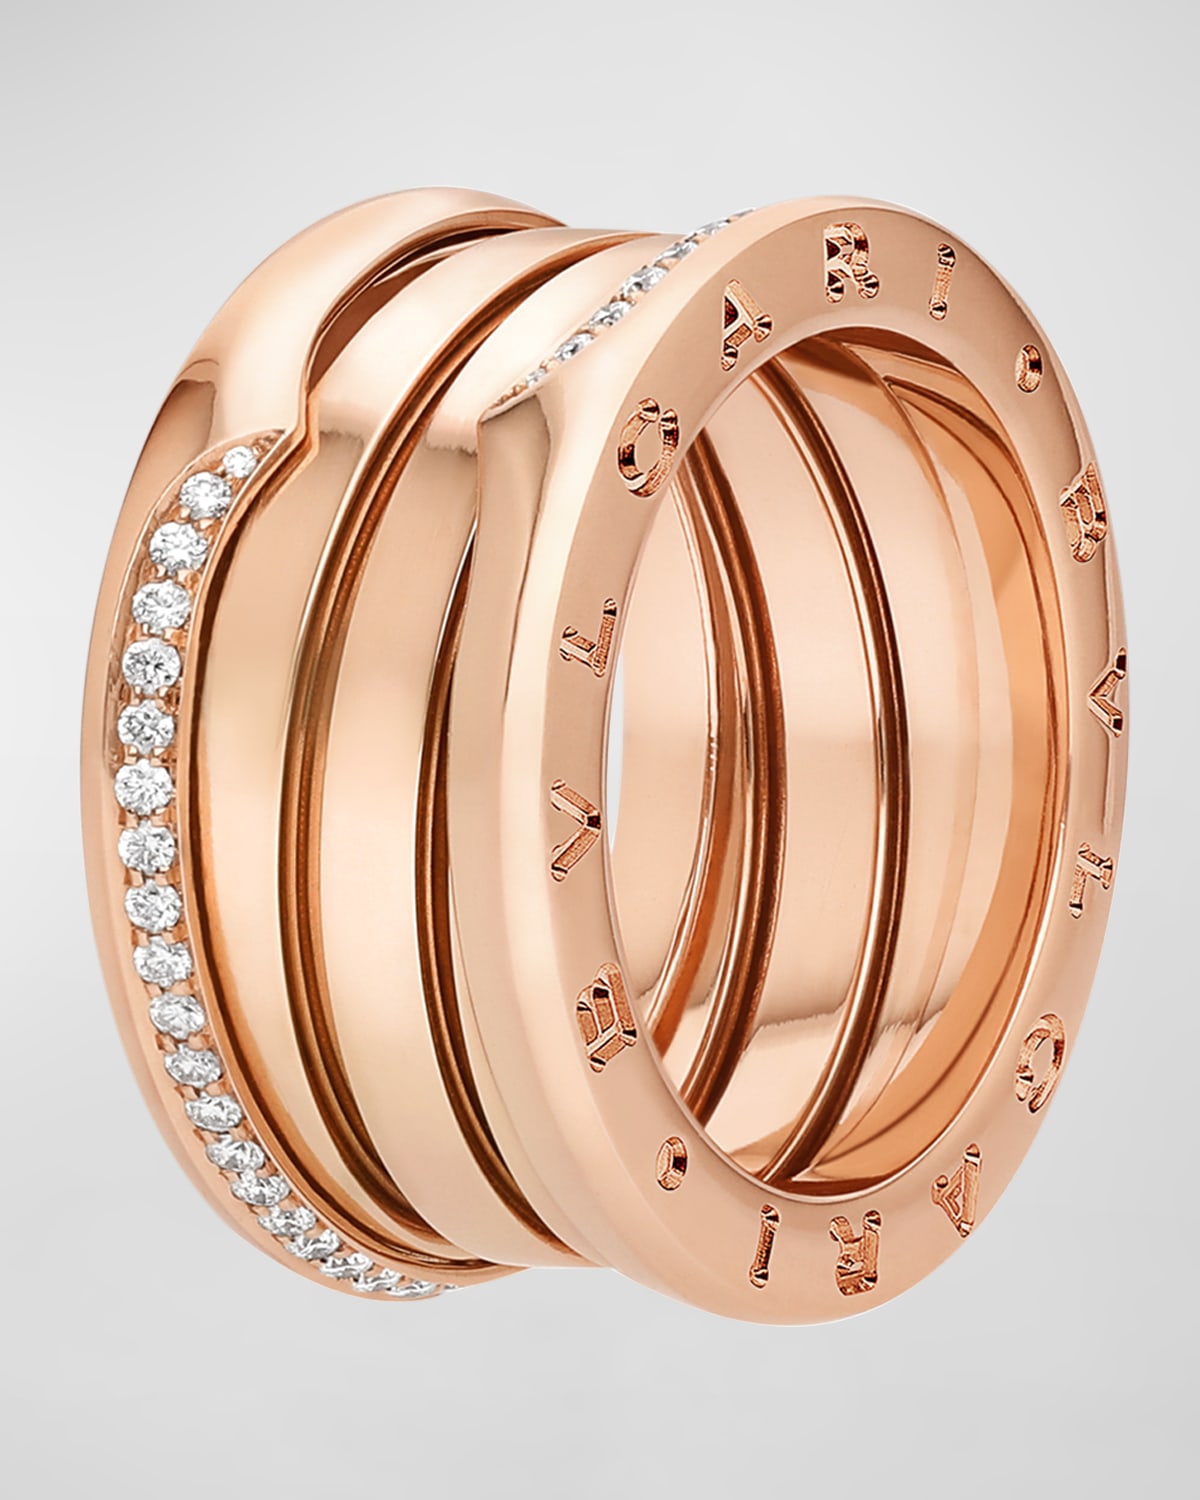 BVLGARI B.Zero1 Rose Gold 3-Band Wave Ring with Diamonds, Size 51